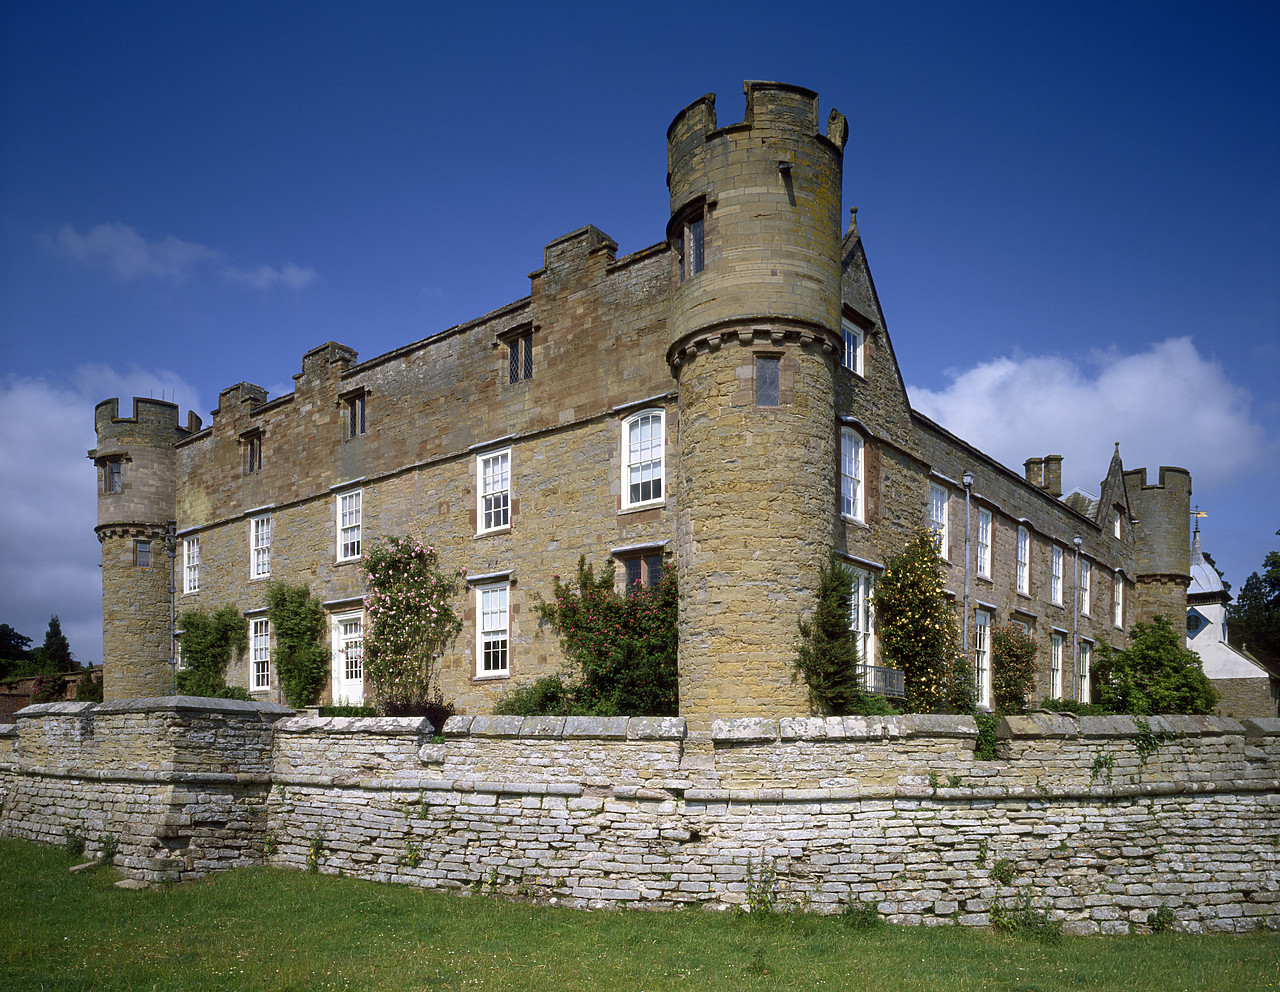 #924027-1 - Croft Castle, near Leominster, Herefordshire, England